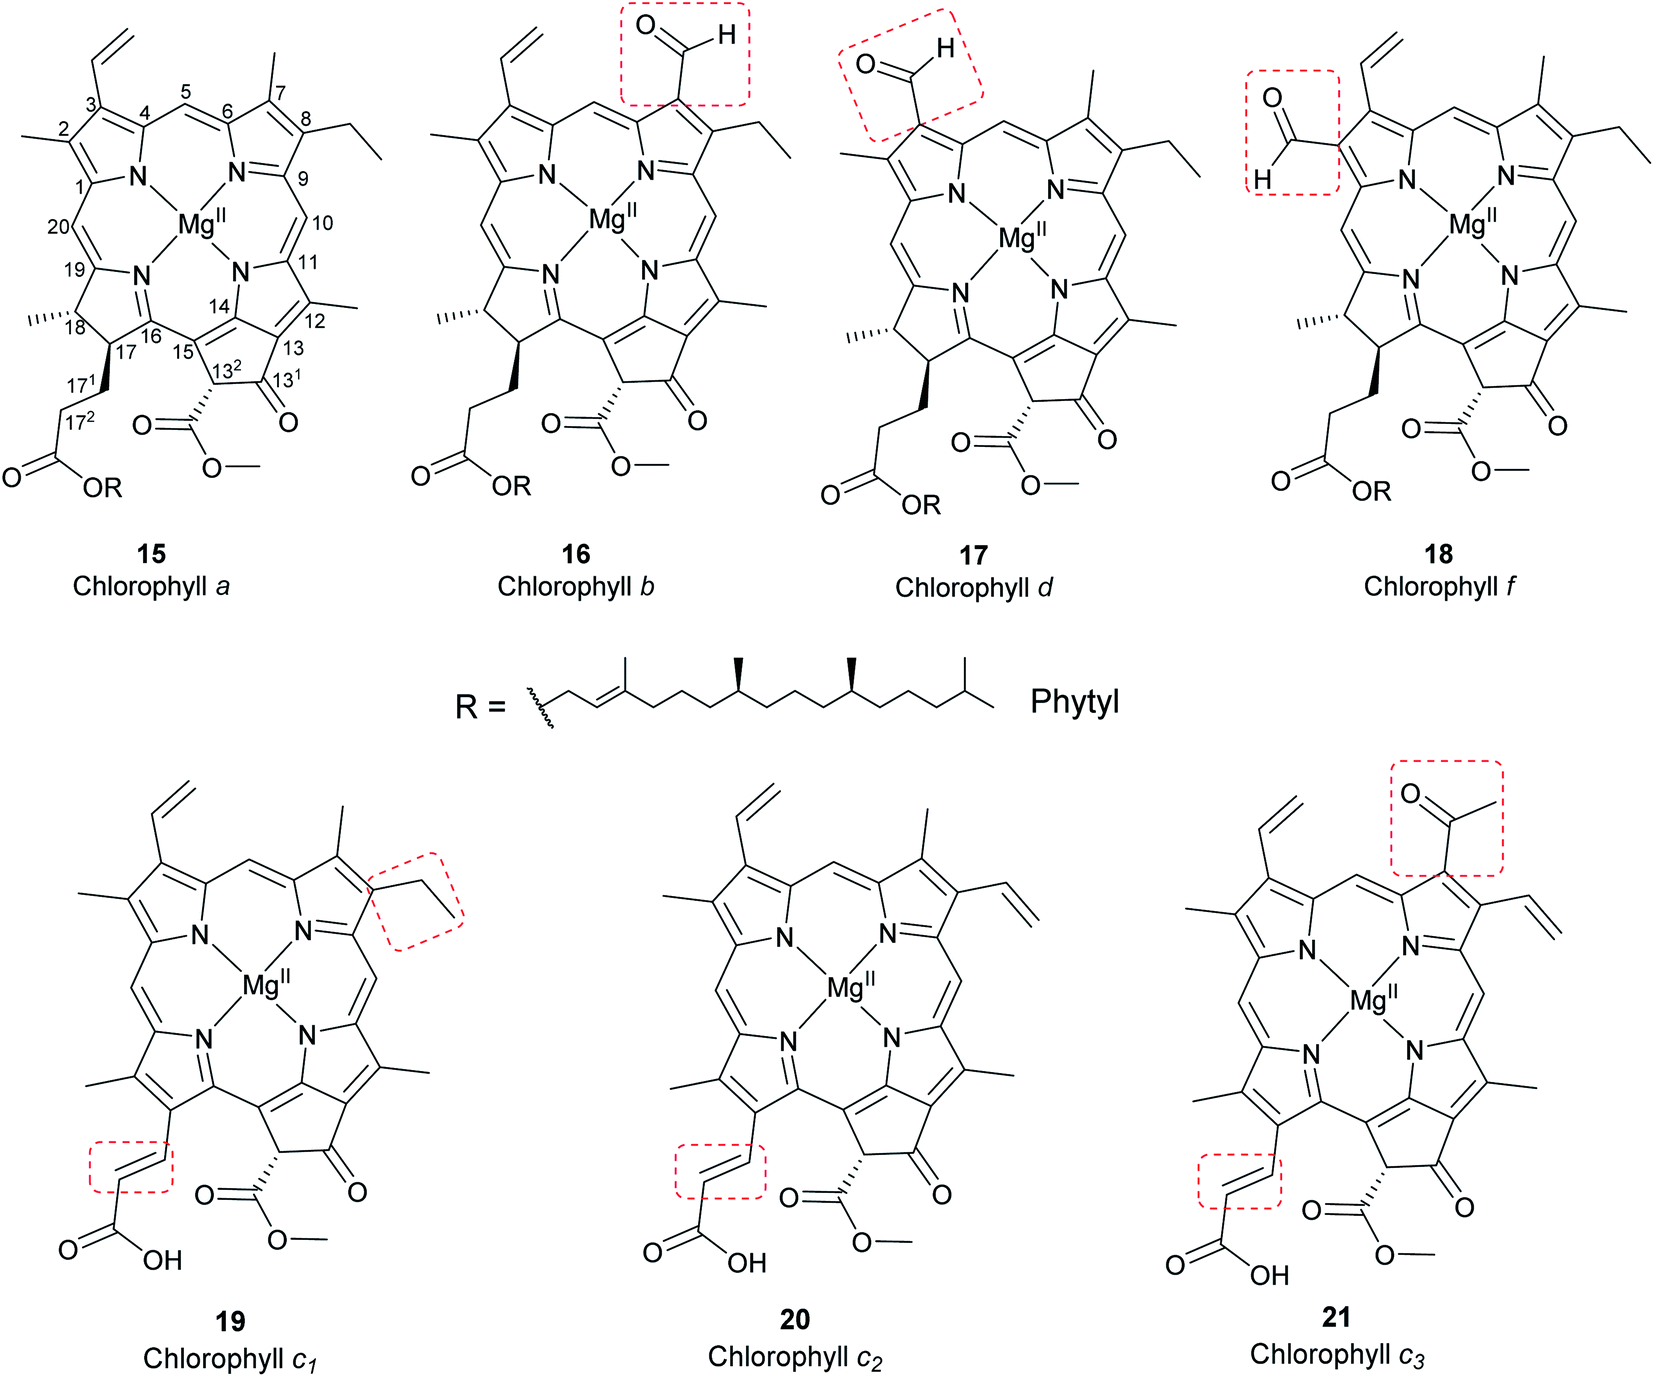 24533-72-0 | Pyropheophorbide-a | ChemScene llc